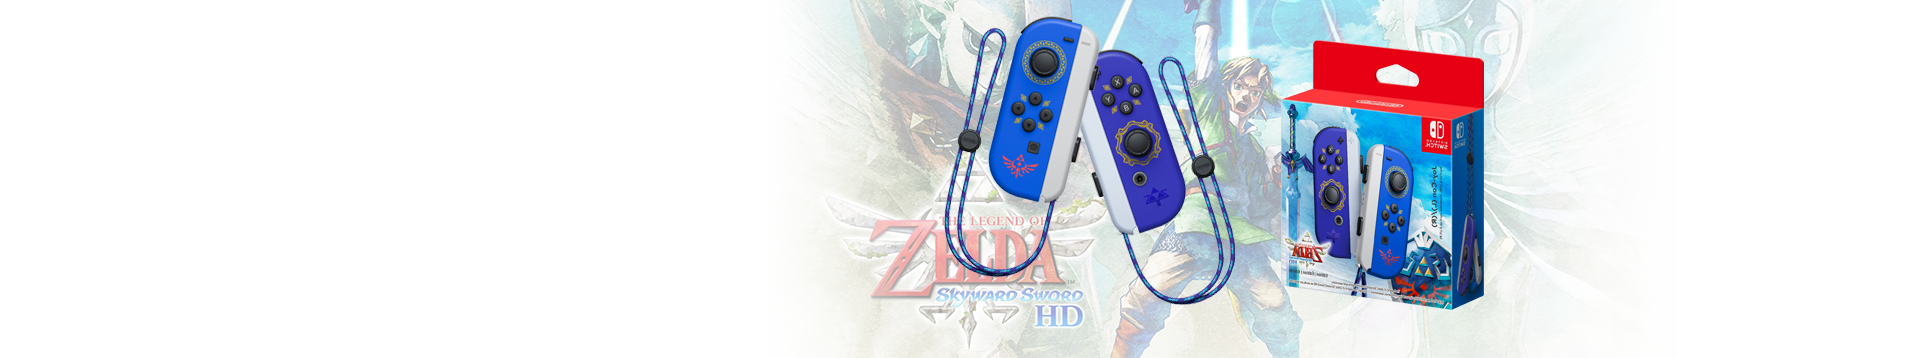 Zelda Skyward Sword Joy Con Banner